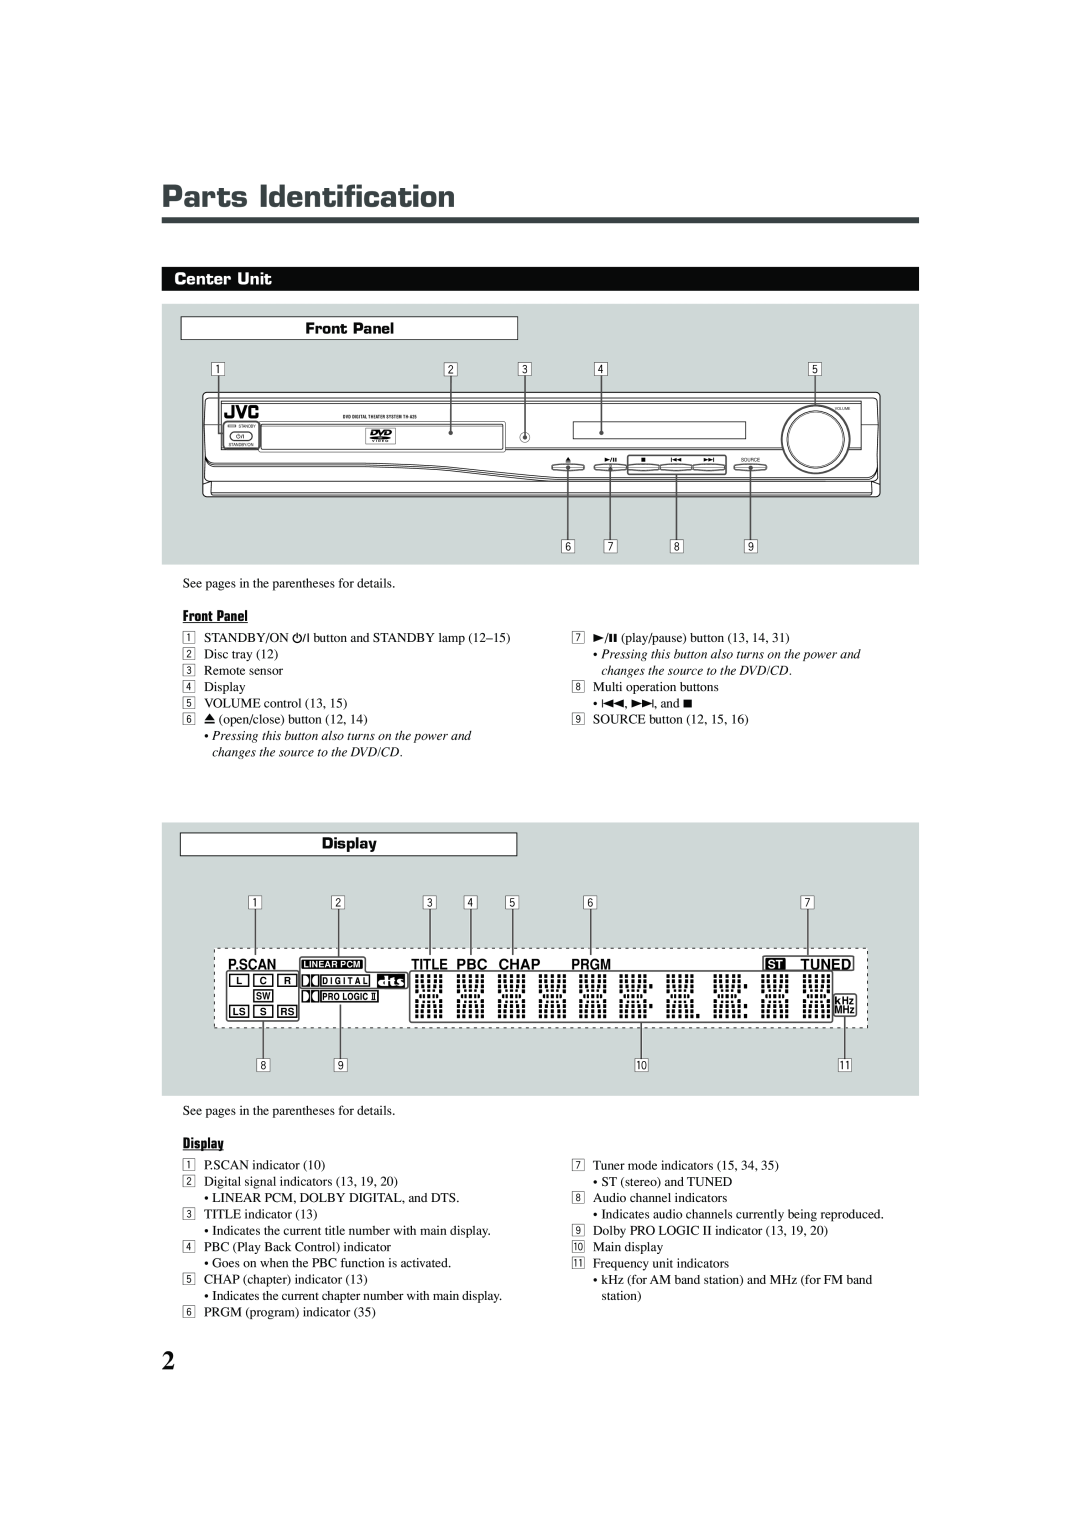 JVC TH-A25 manual Parts Identification, Center Unit, Front Panel, Display, Title Pbc, Chap, Prgm, Tuned 